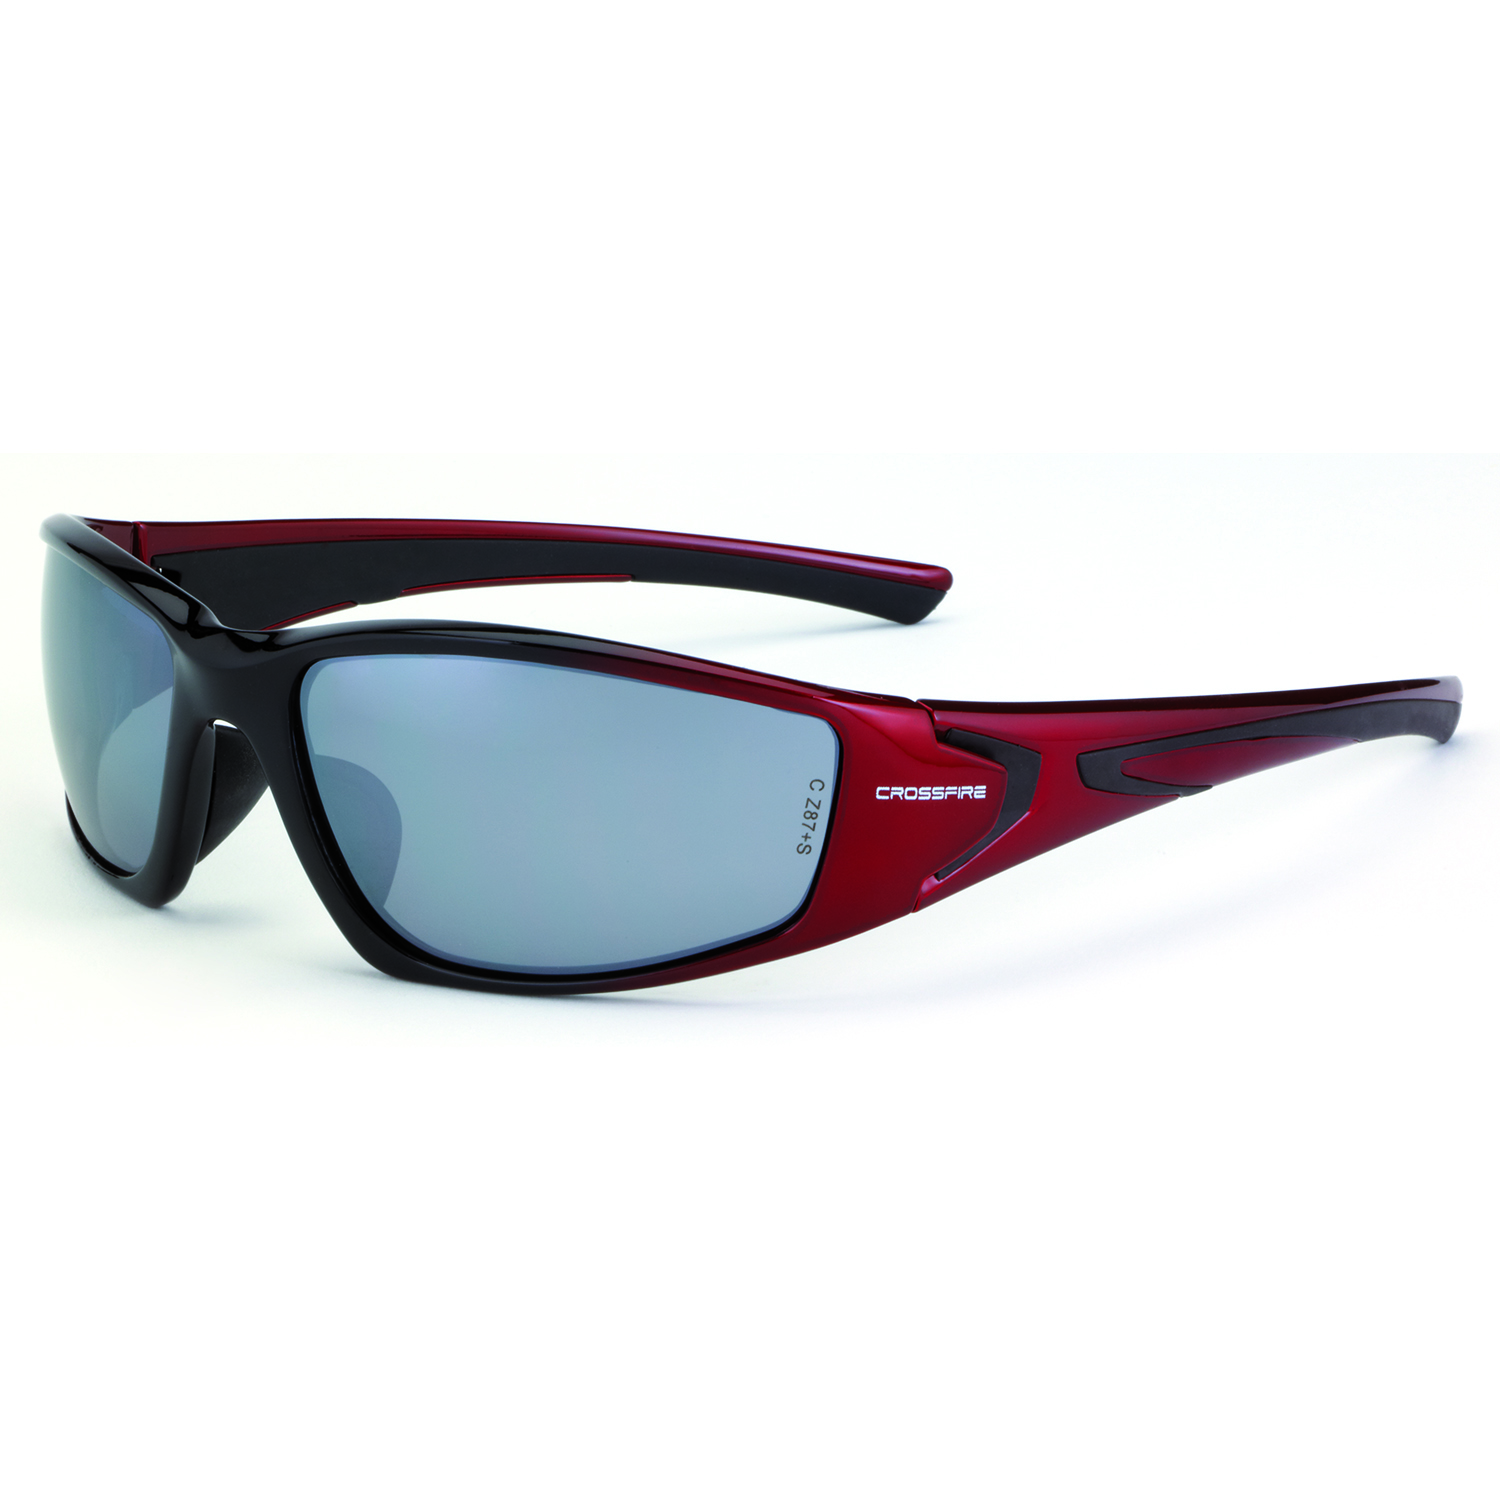 RPG Premium Safety Eyewear - Shiny Black/Pearl Red Frame - Silver Mirror Lens